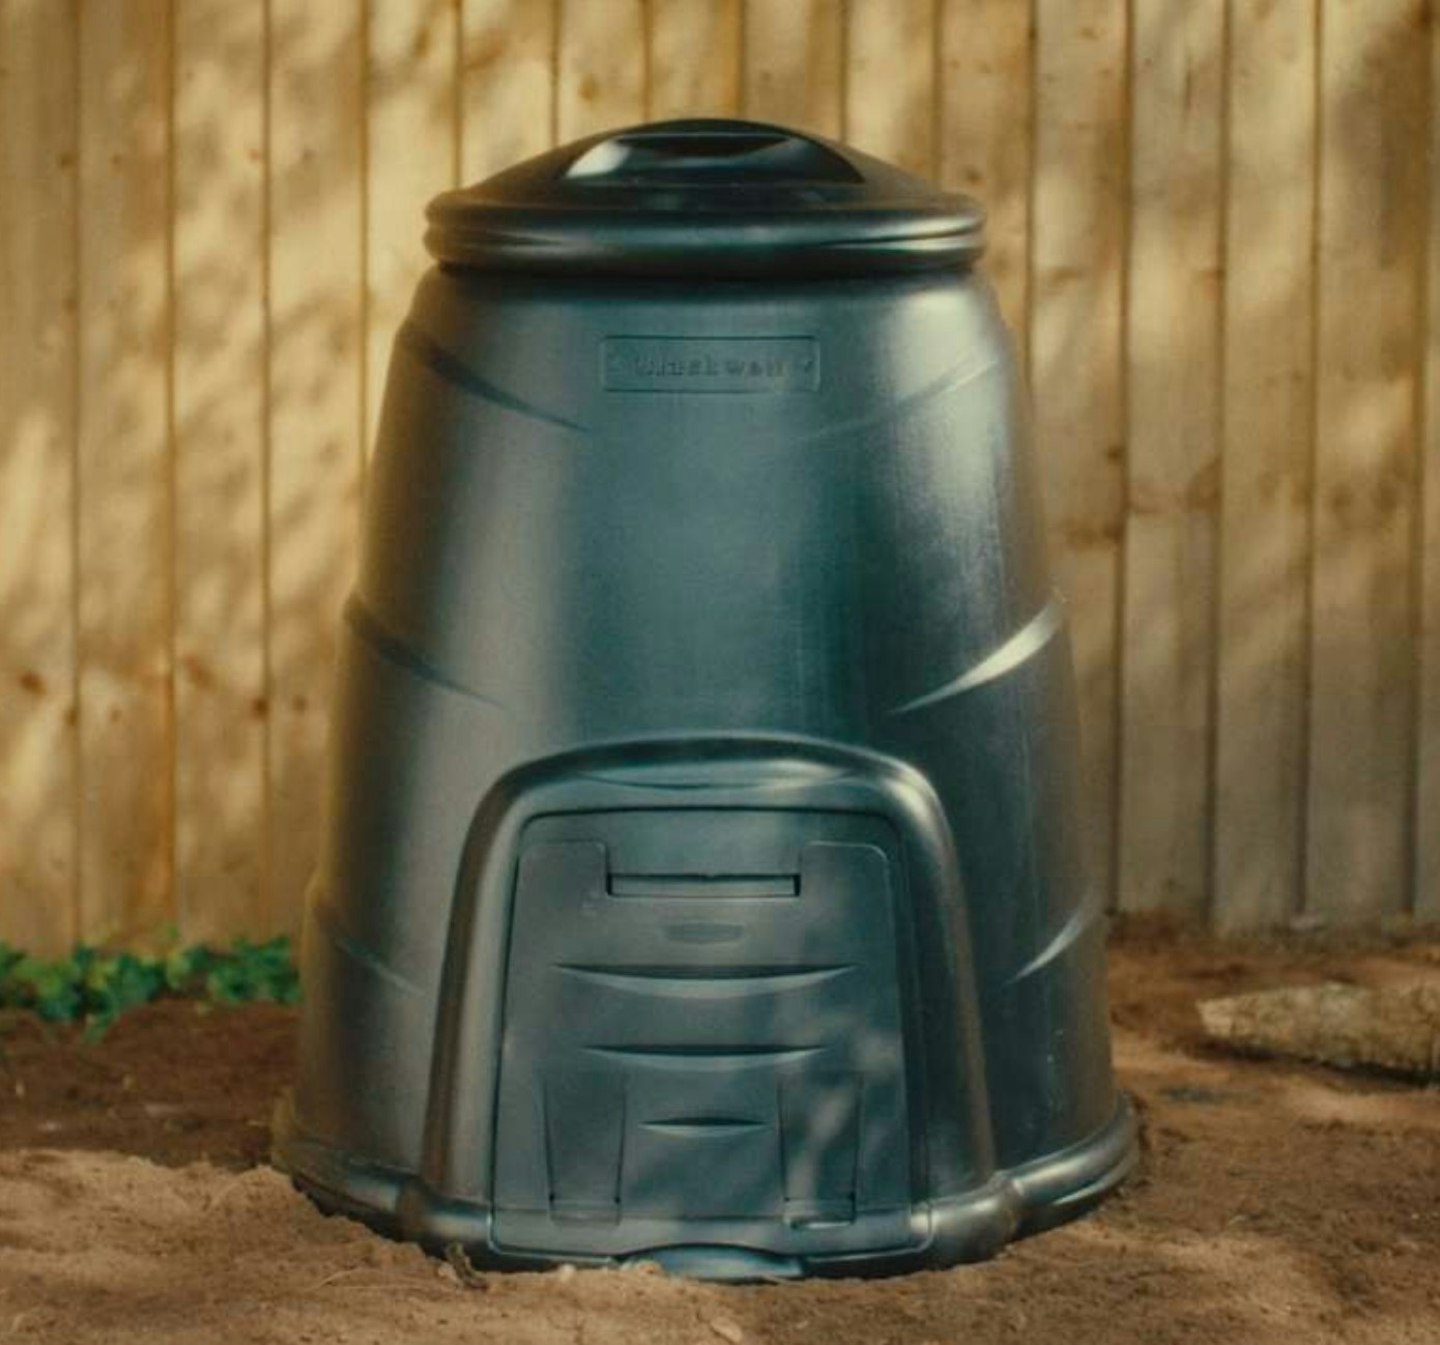 Blackwall Compost Converter